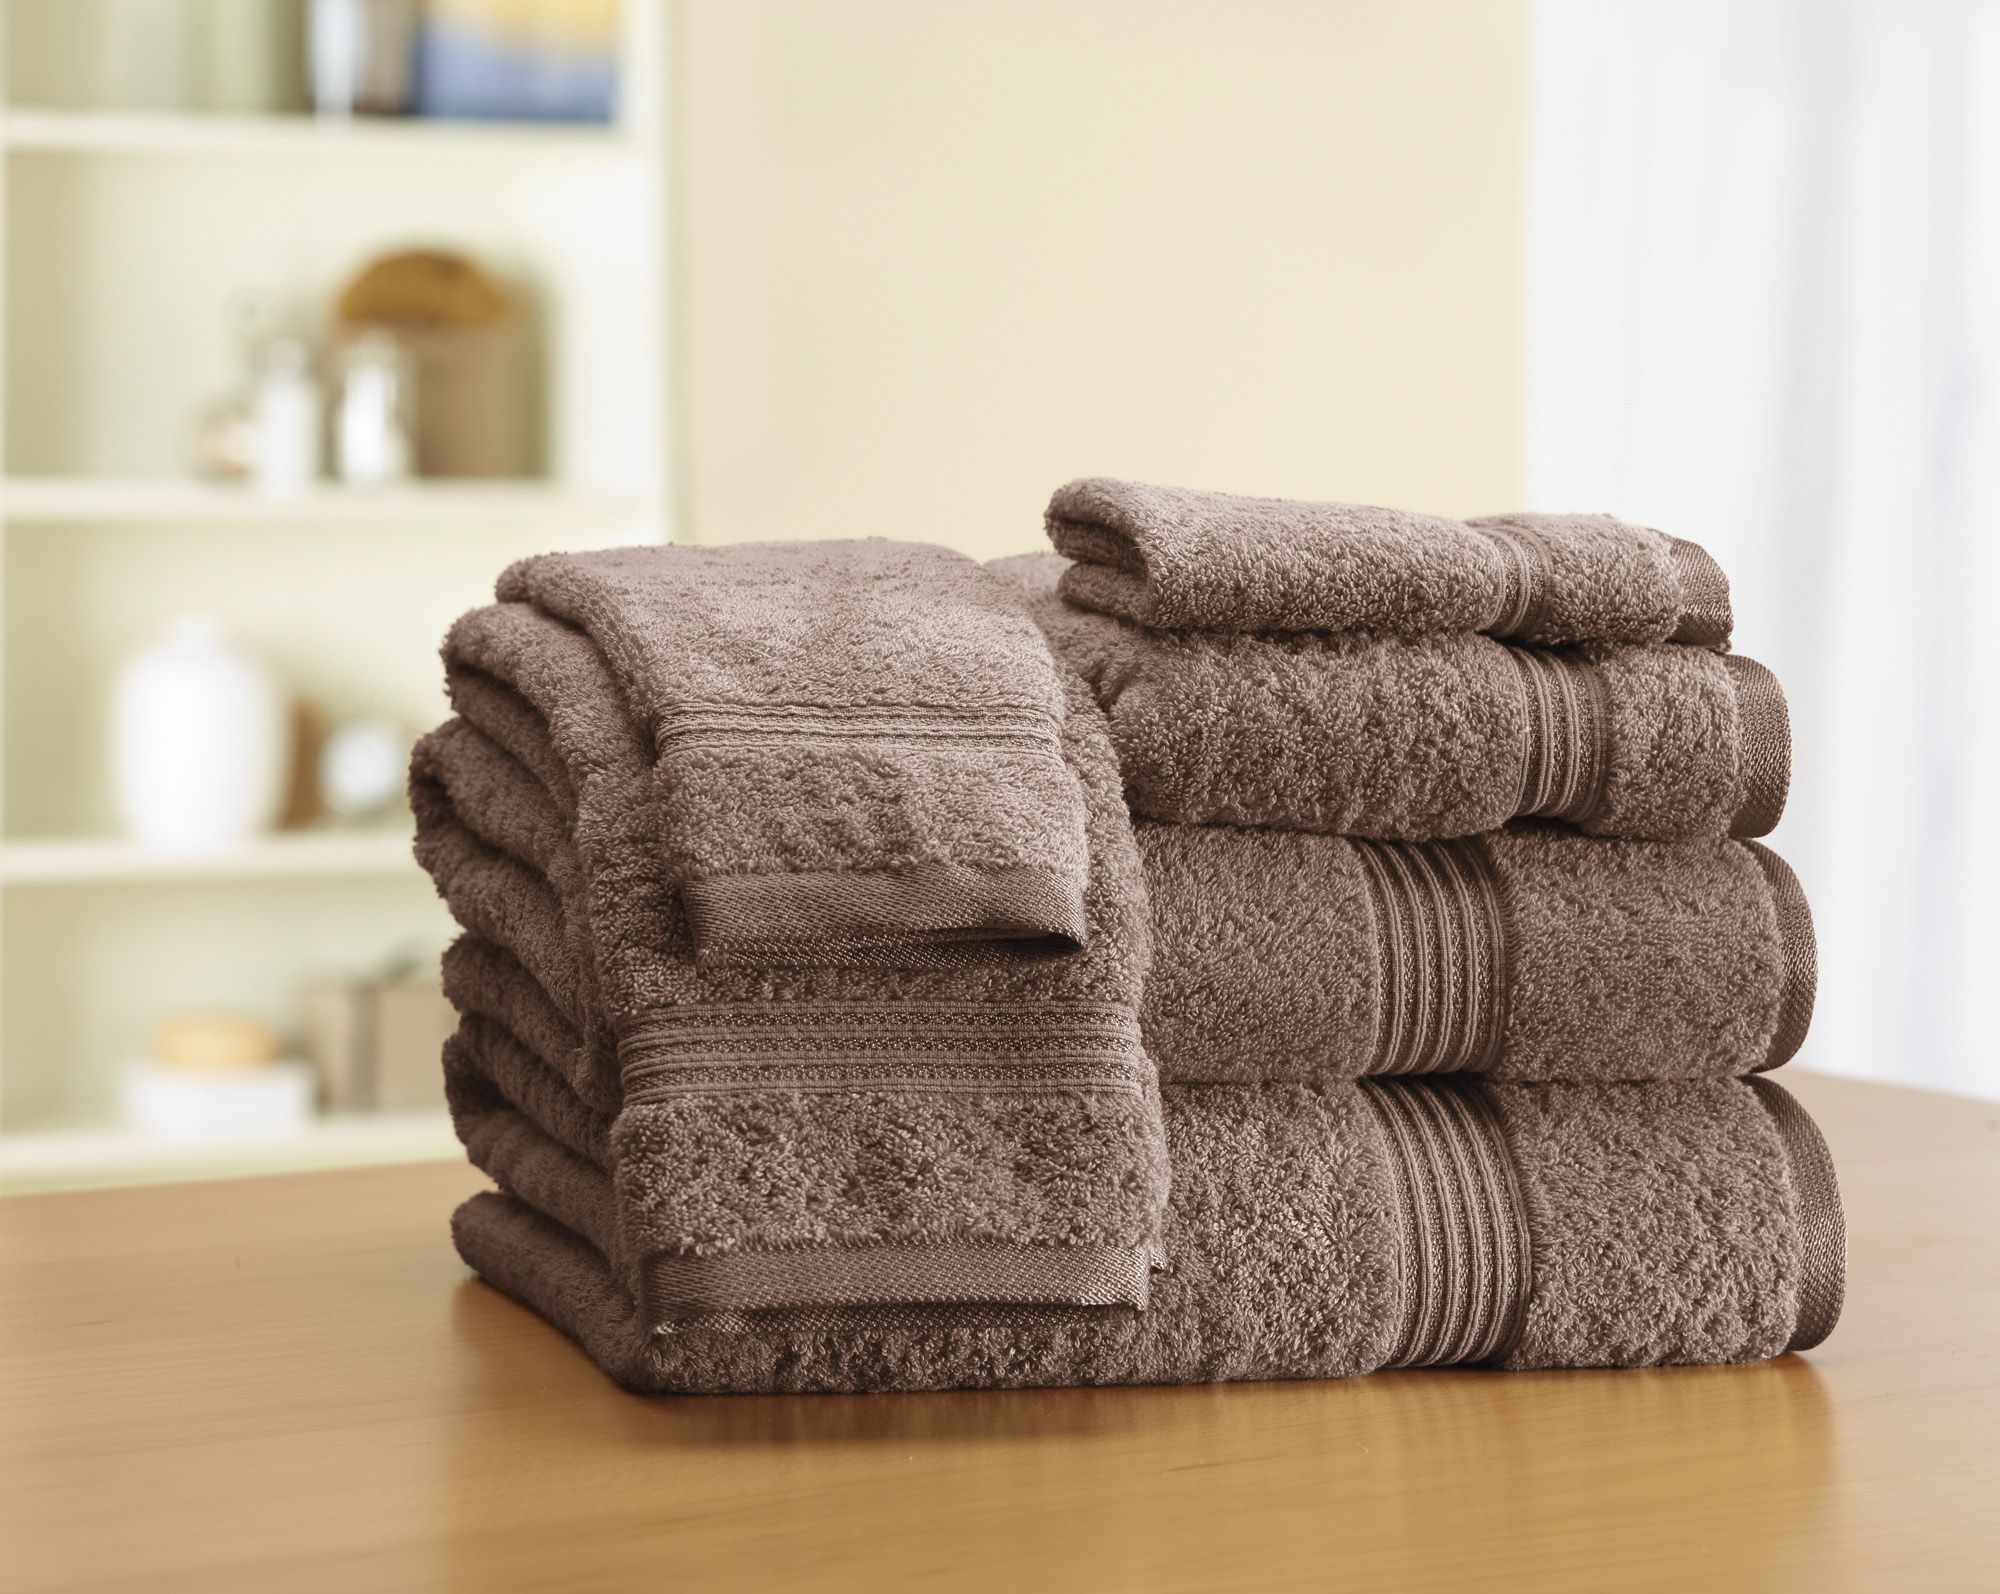 6-Piece Premium Towel Set, 2 Bath Towels, 2 Hand Towels, and 2